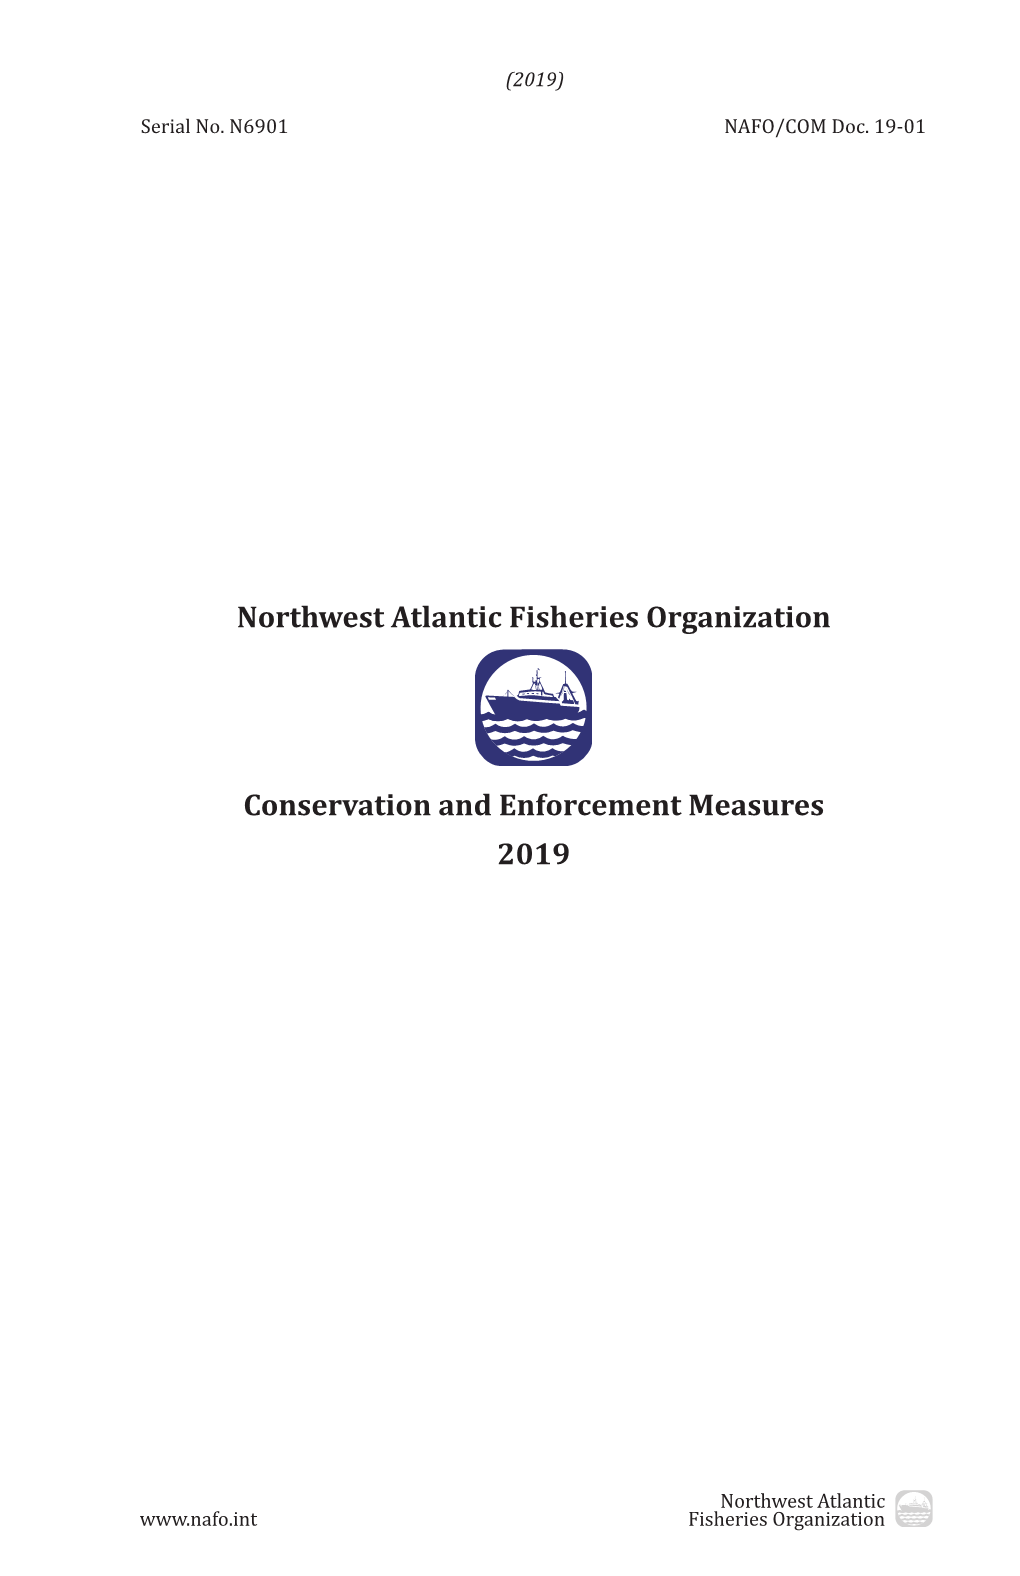 NAFO Conservation and Enforcement Measures 2019